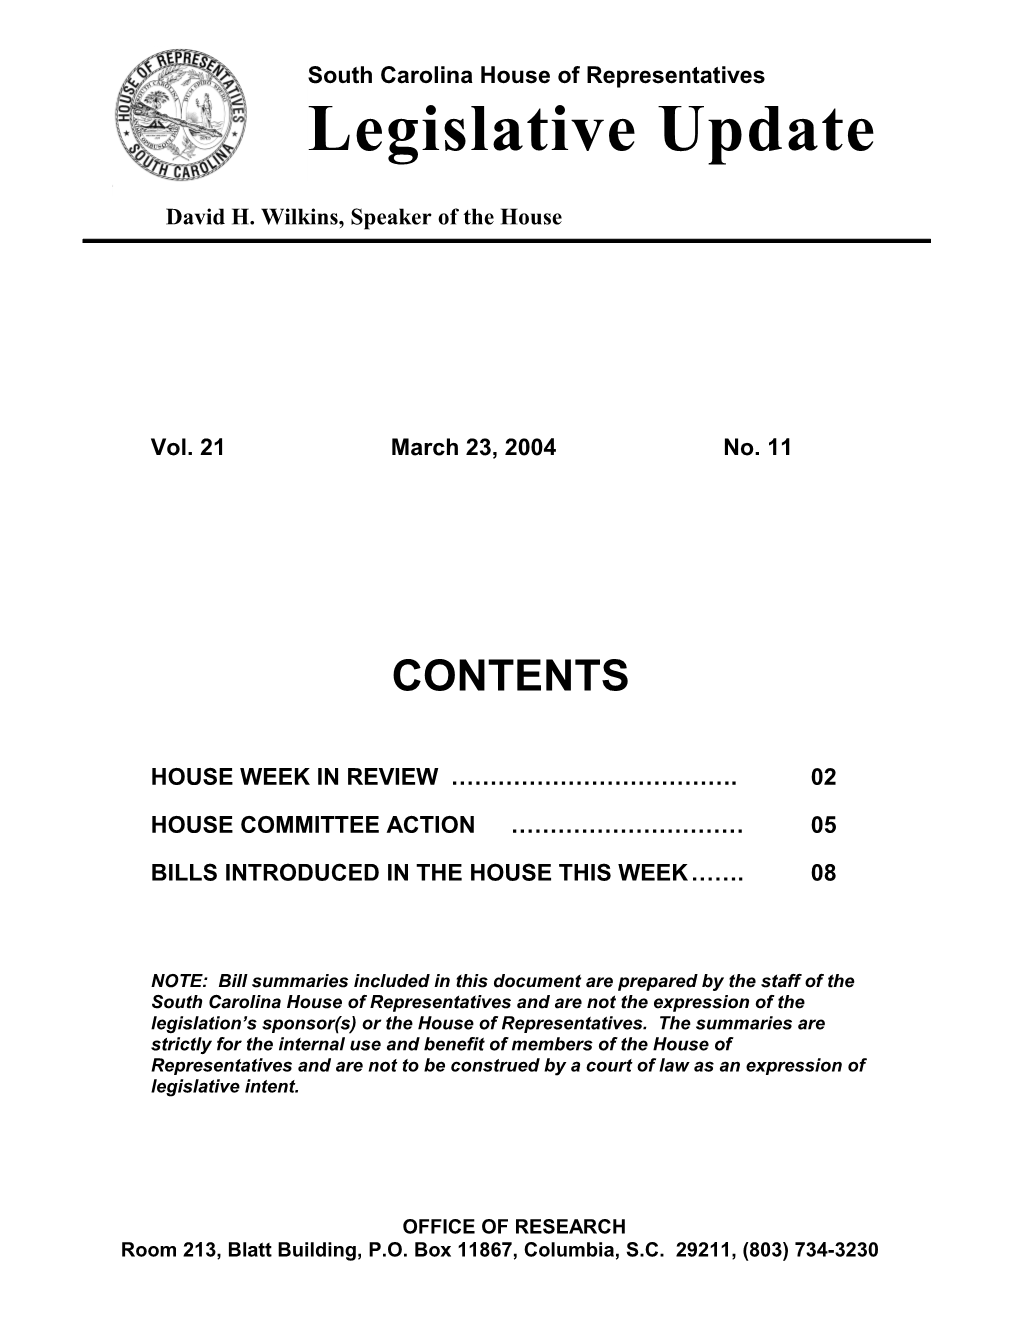 Legislative Update - Vol. 21 No. 11 March 23, 2004 - South Carolina Legislature Online